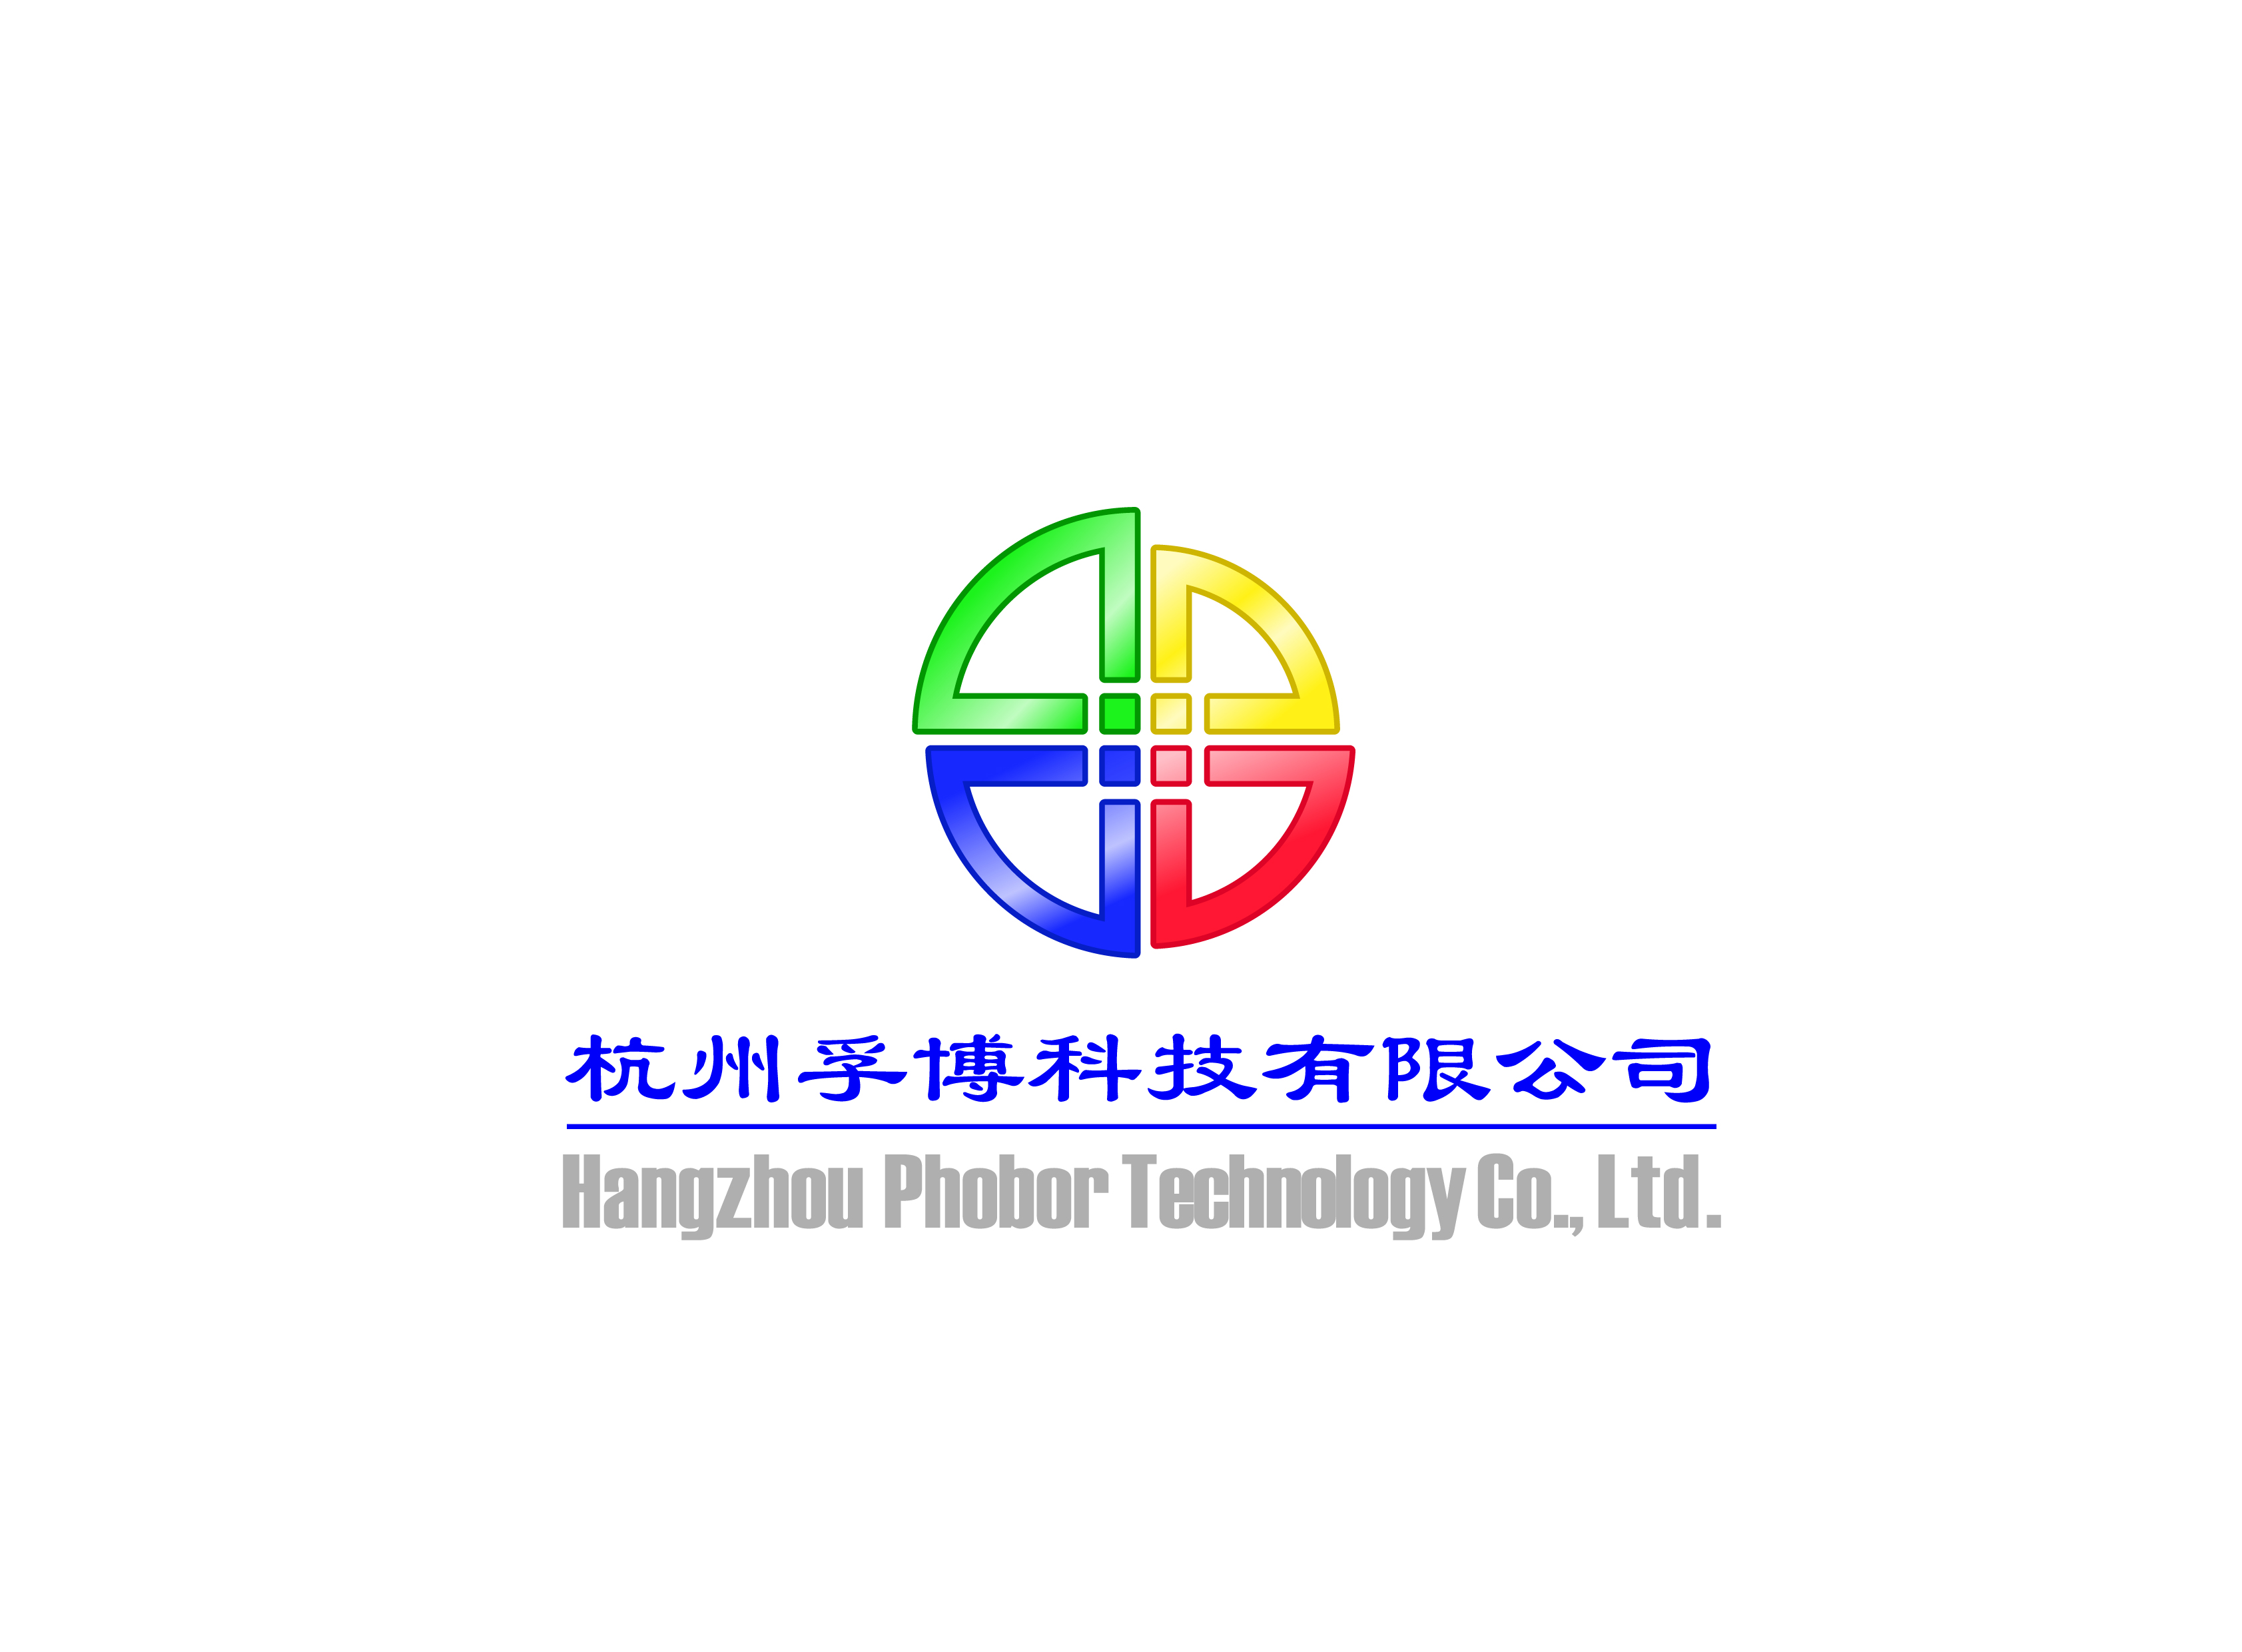 Hangzhou Phobor Technology Co., Ltd._logo